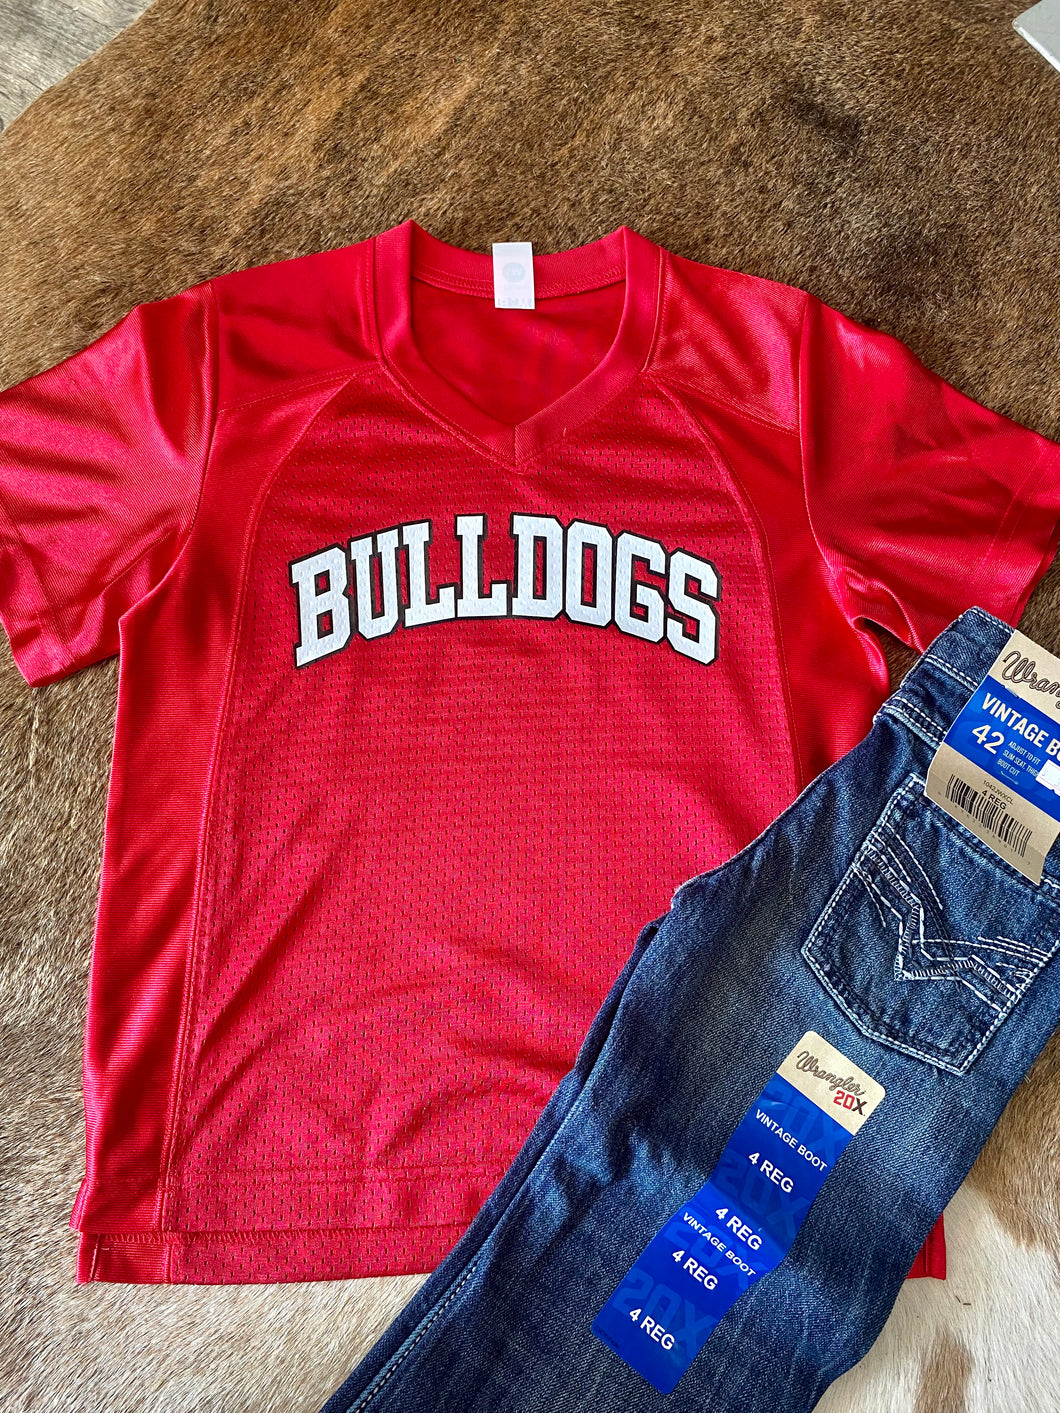 Bulldogs Football Jersey Red